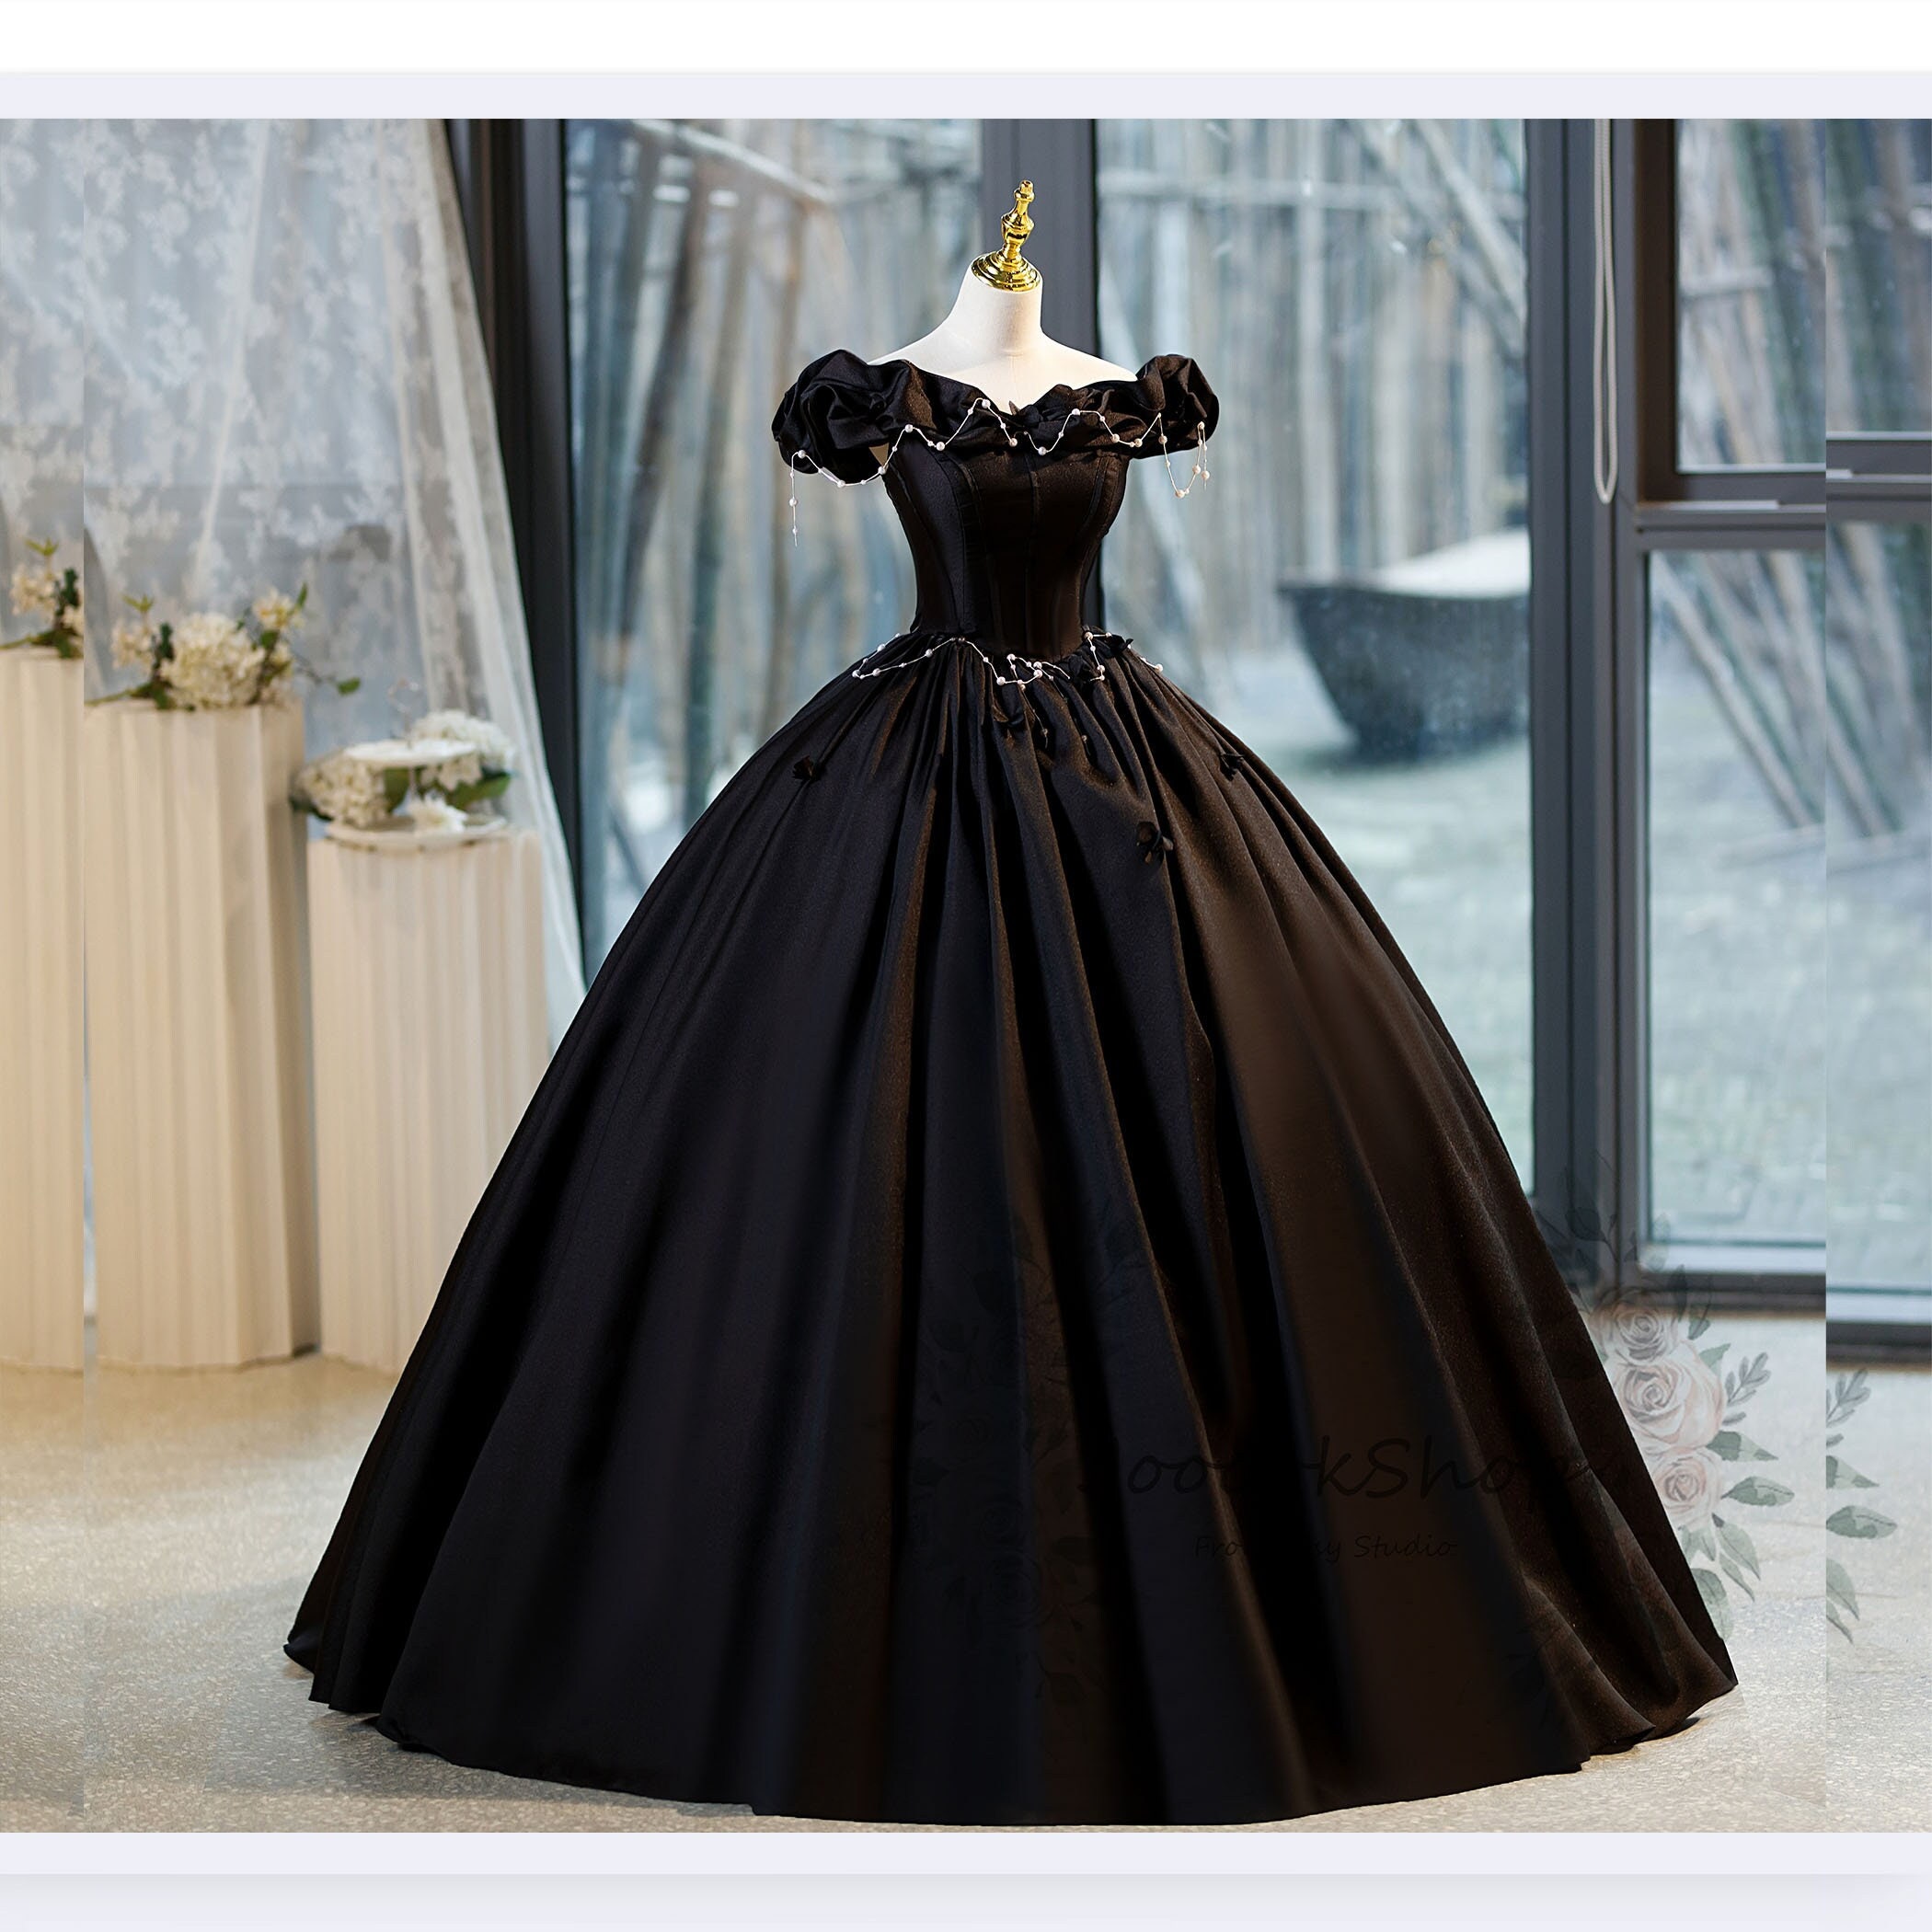 Black Ball Gown Prom Dresses,Black Ball Gown Dresses UK